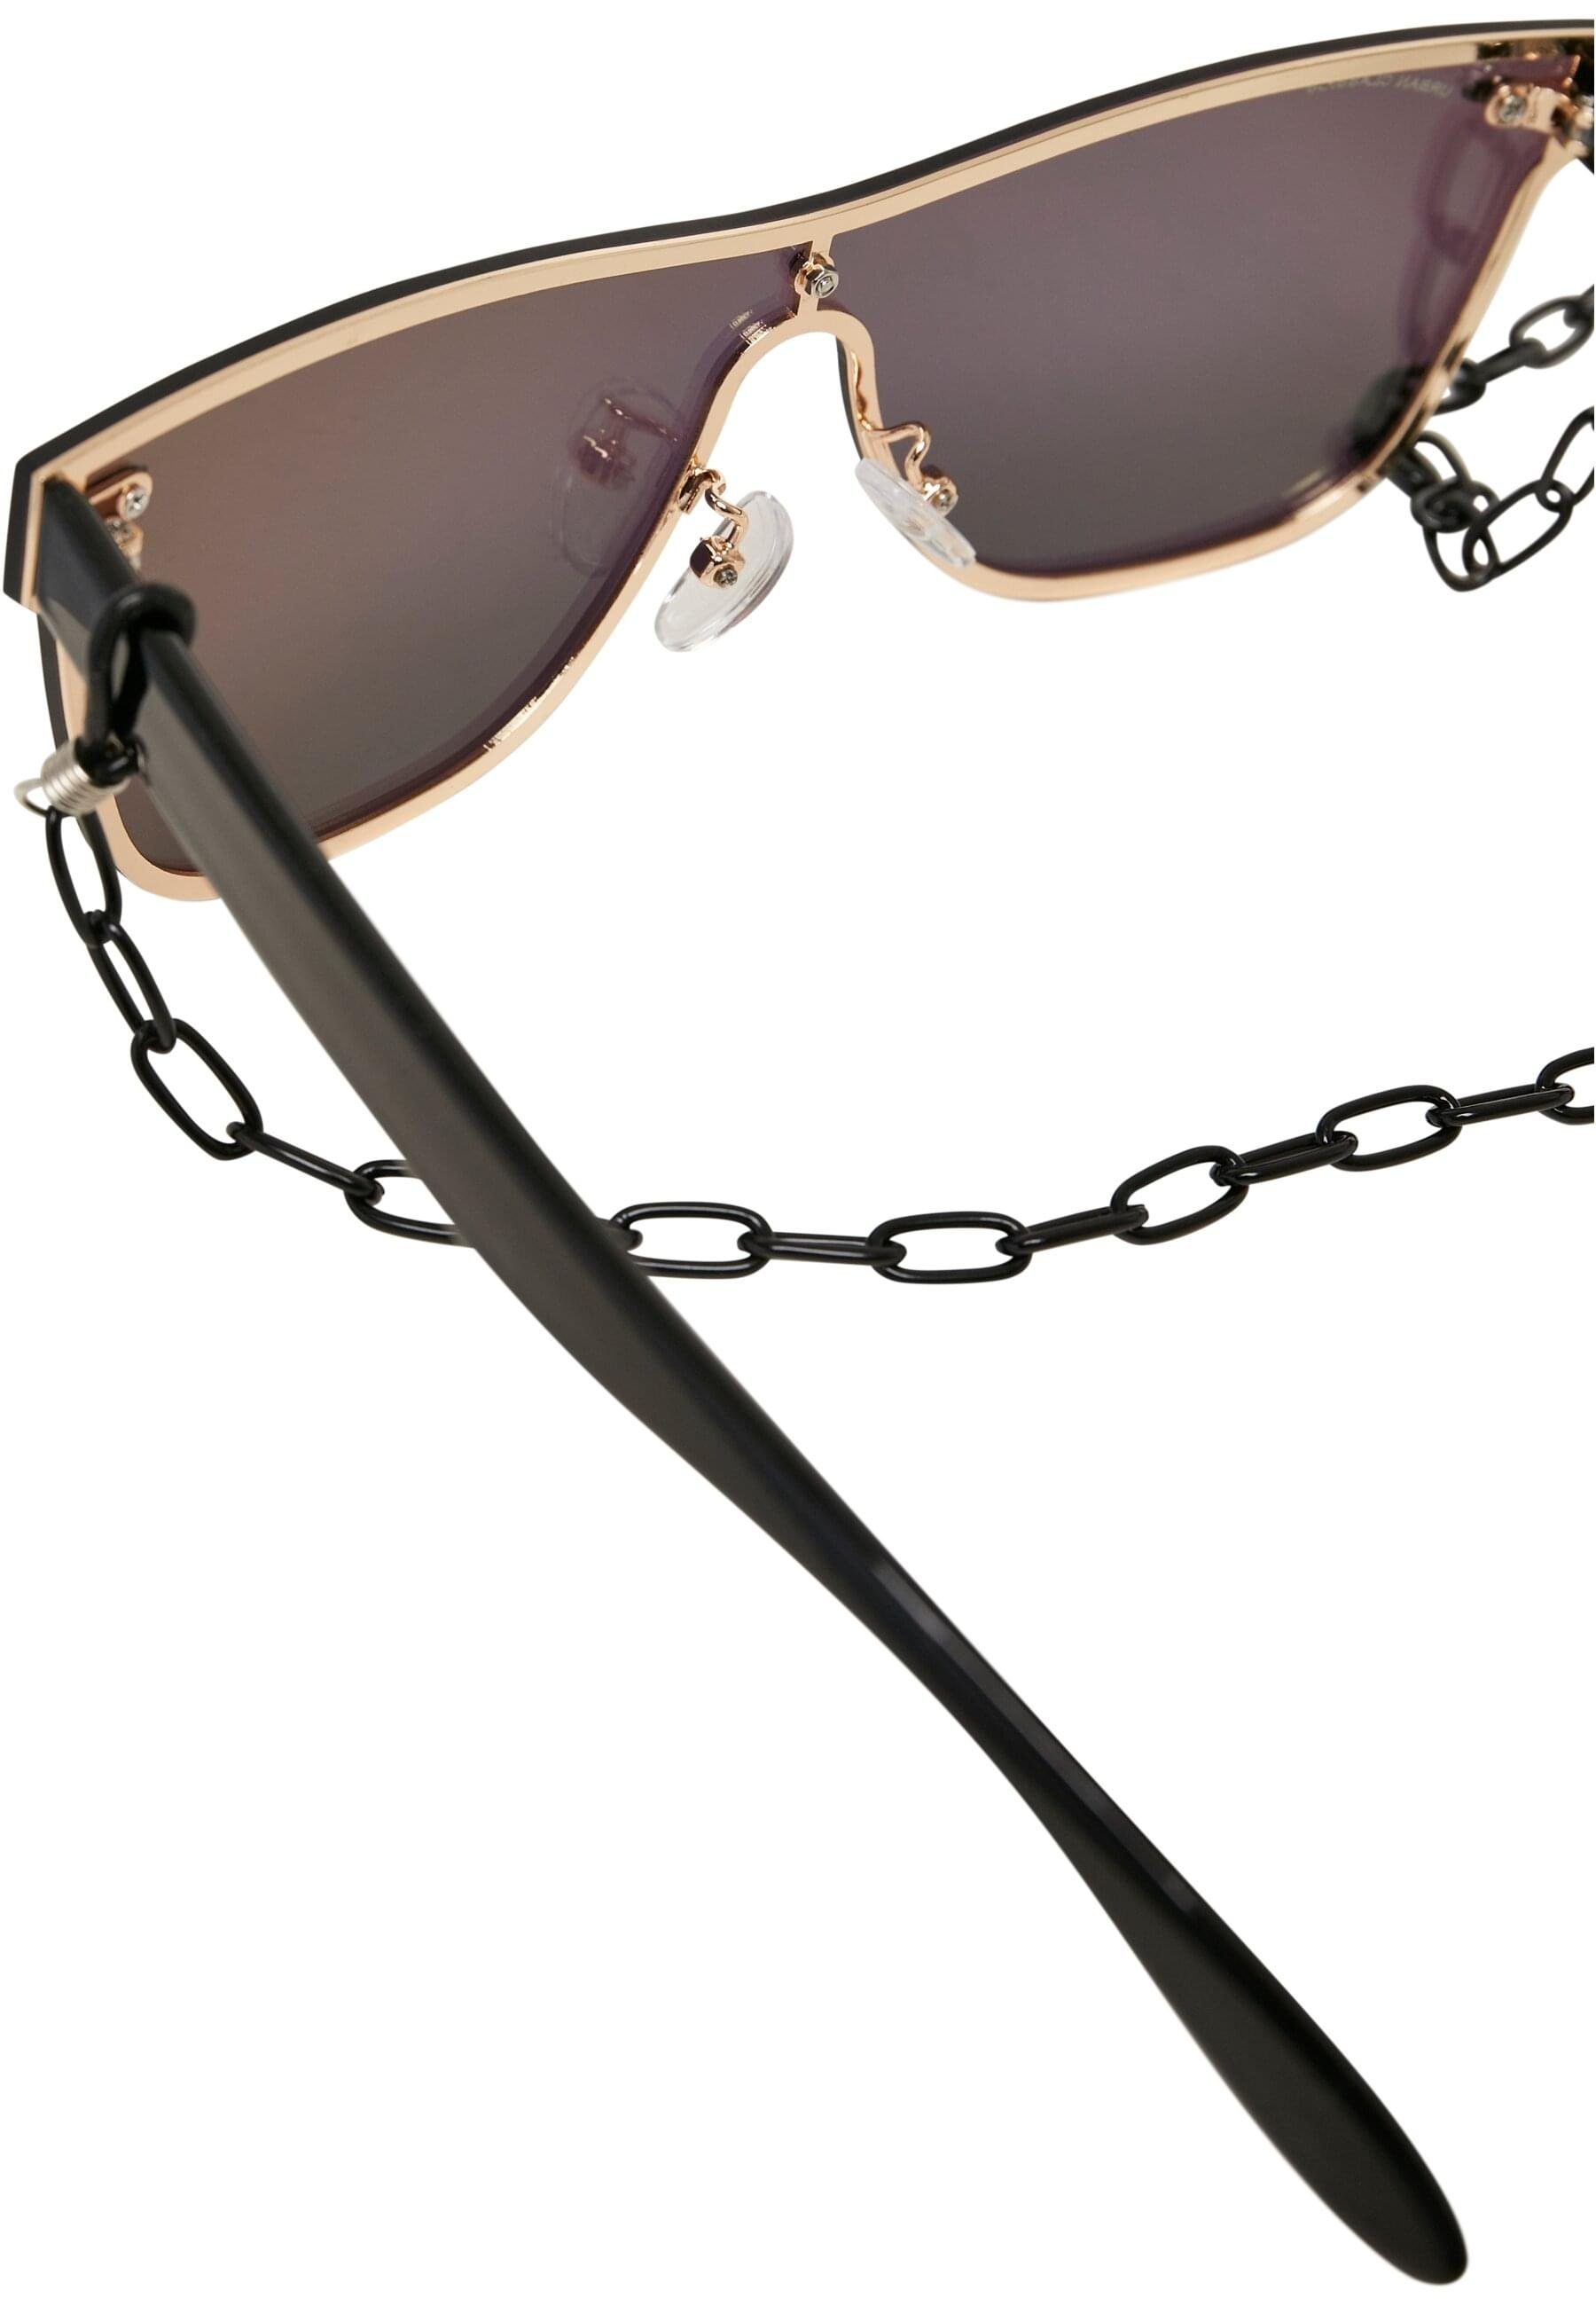 Sonnenbrille URBAN 103 CLASSICS Sunglasses mirror Chain Unisex black/gold